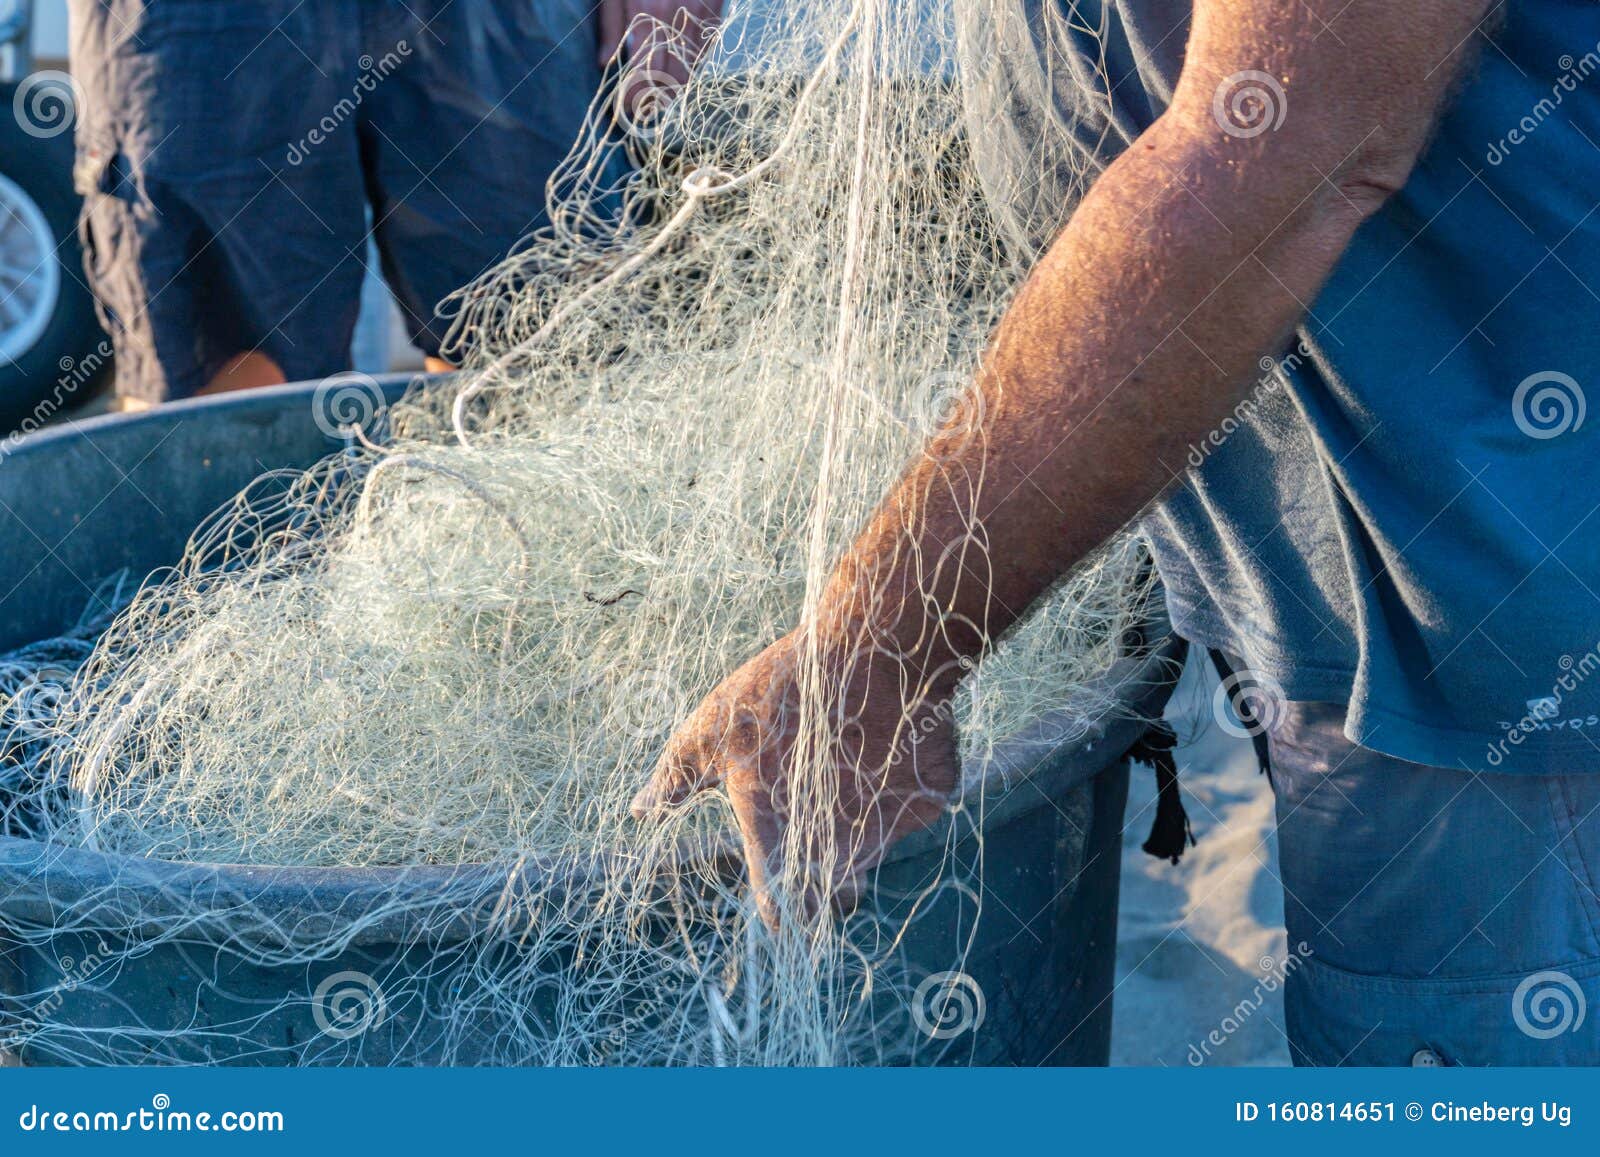 Mending a fishing net stock image. Image of fishermen - 160814651